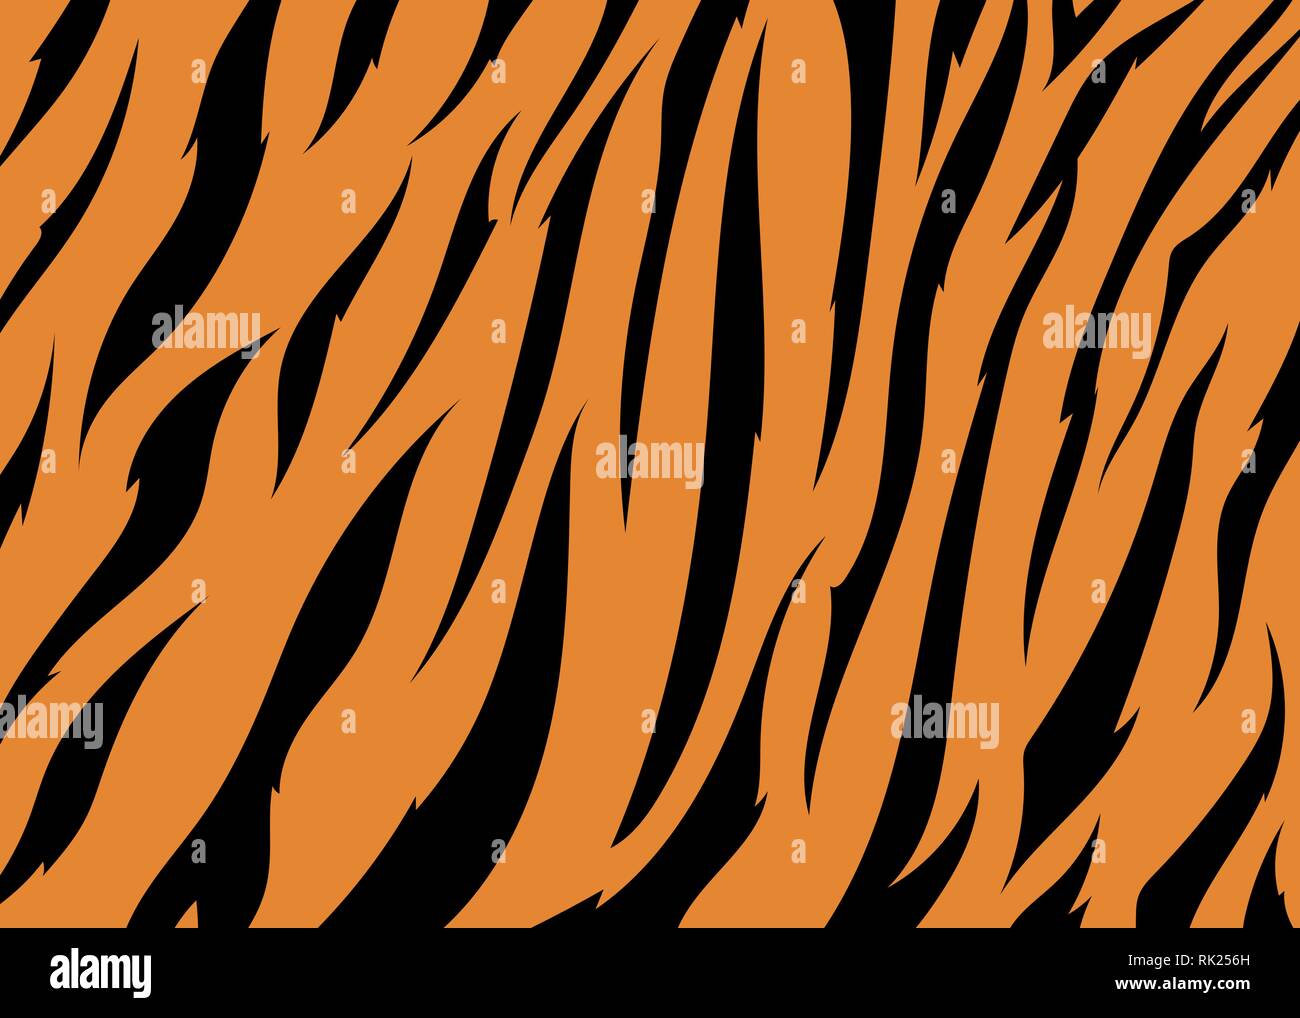 Tiger seamless pattern design, vector illustration background. wildlife fur skin design illustration. Stock Vector